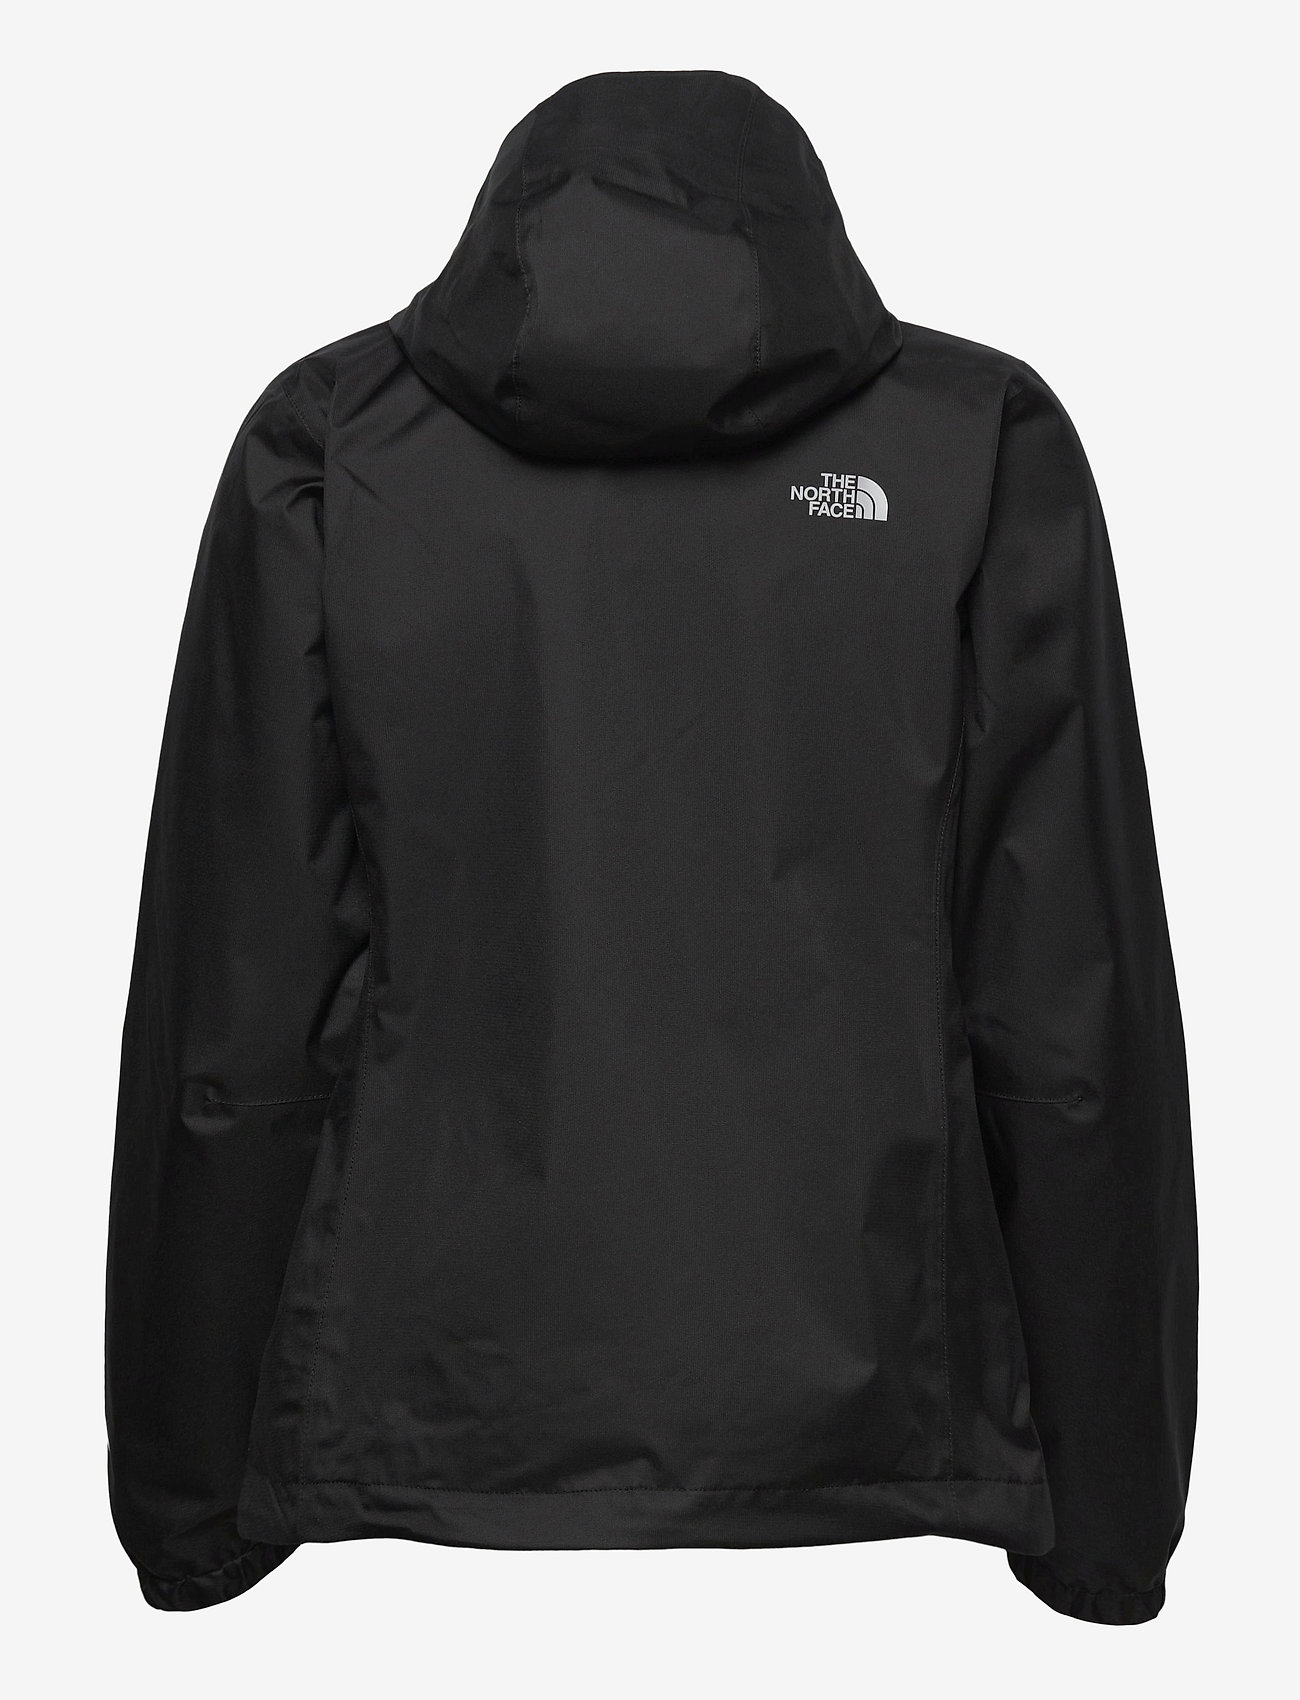 The North Face - W QUEST JACKET - EU - sports jackets - tnf black/foil grey - 1